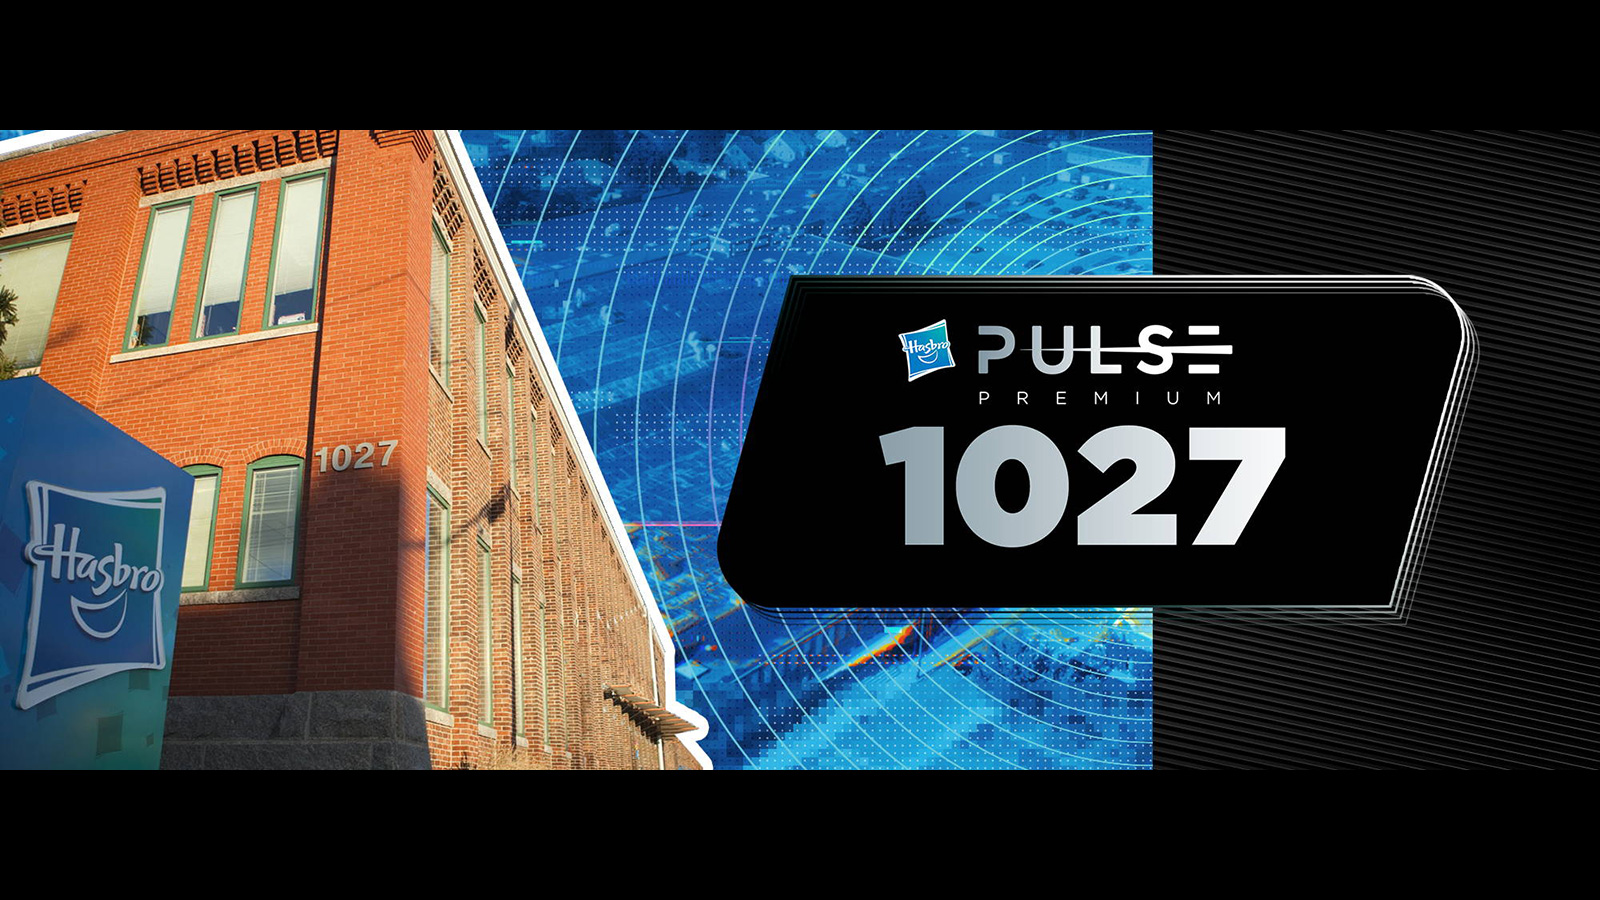 Hasbro Pulse Premium Members 1027 Livestream Event